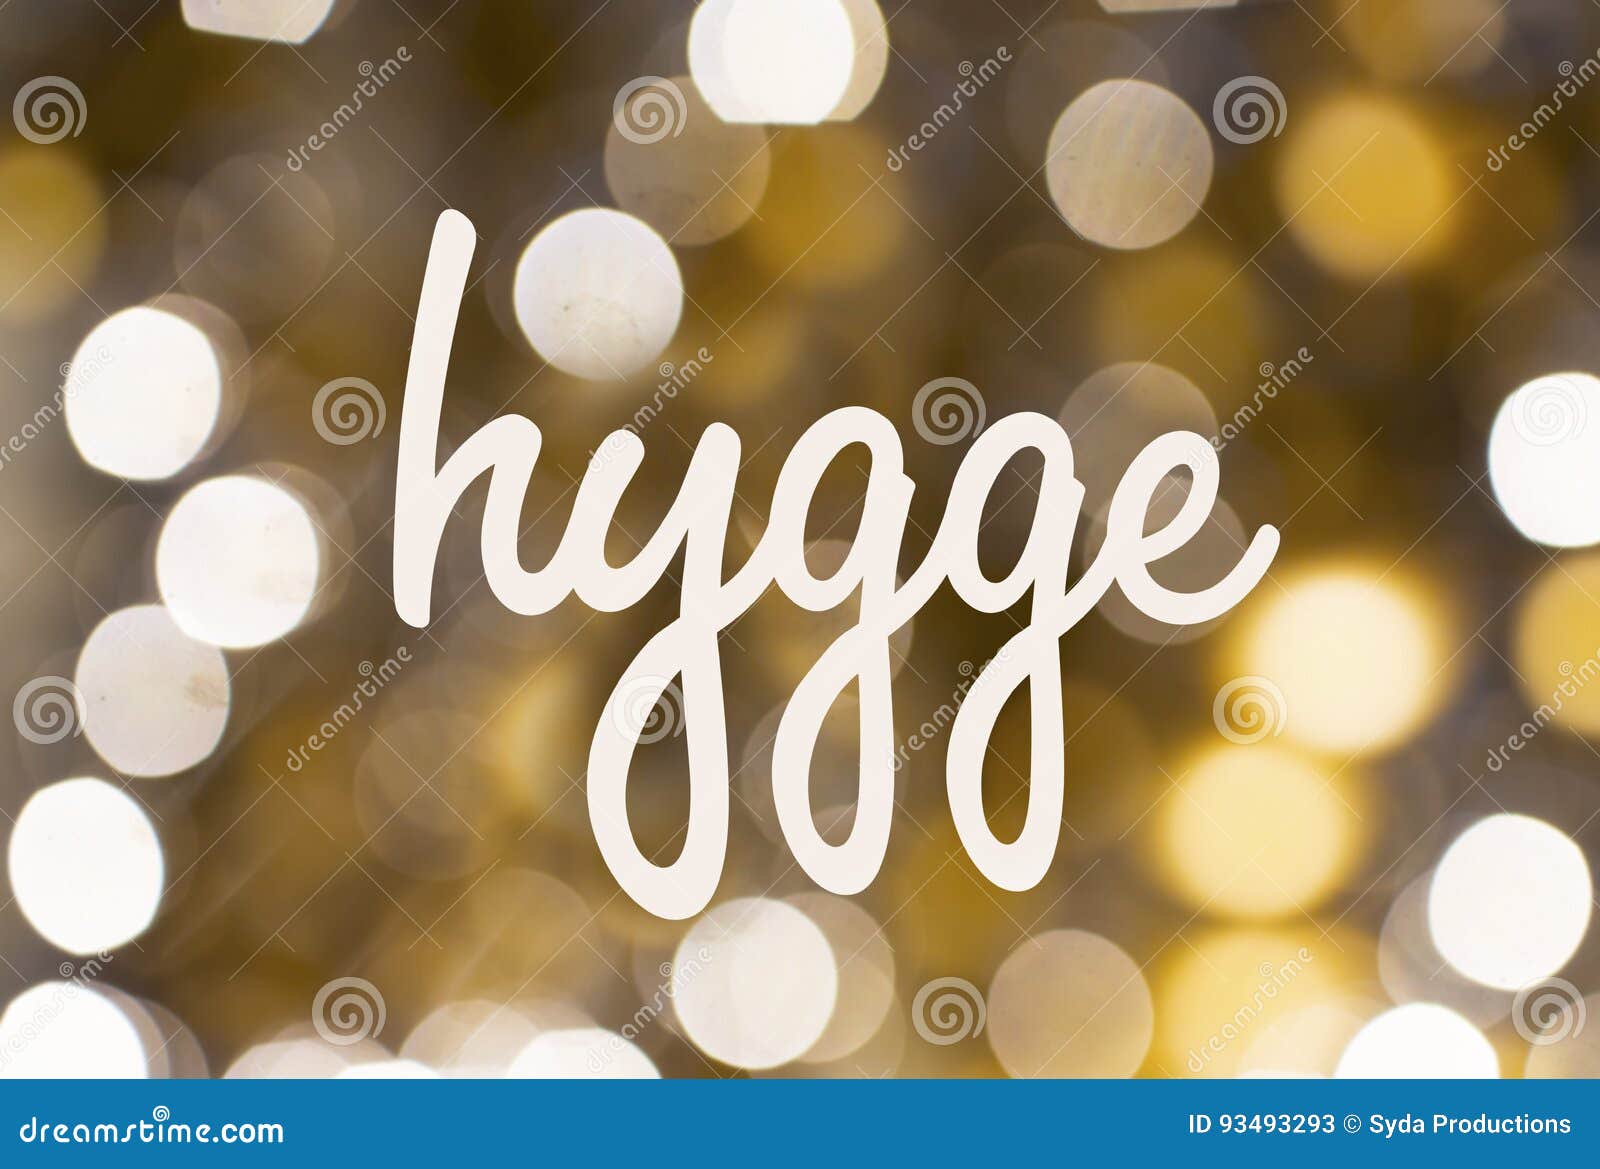 word hygge over blurred golden lights background